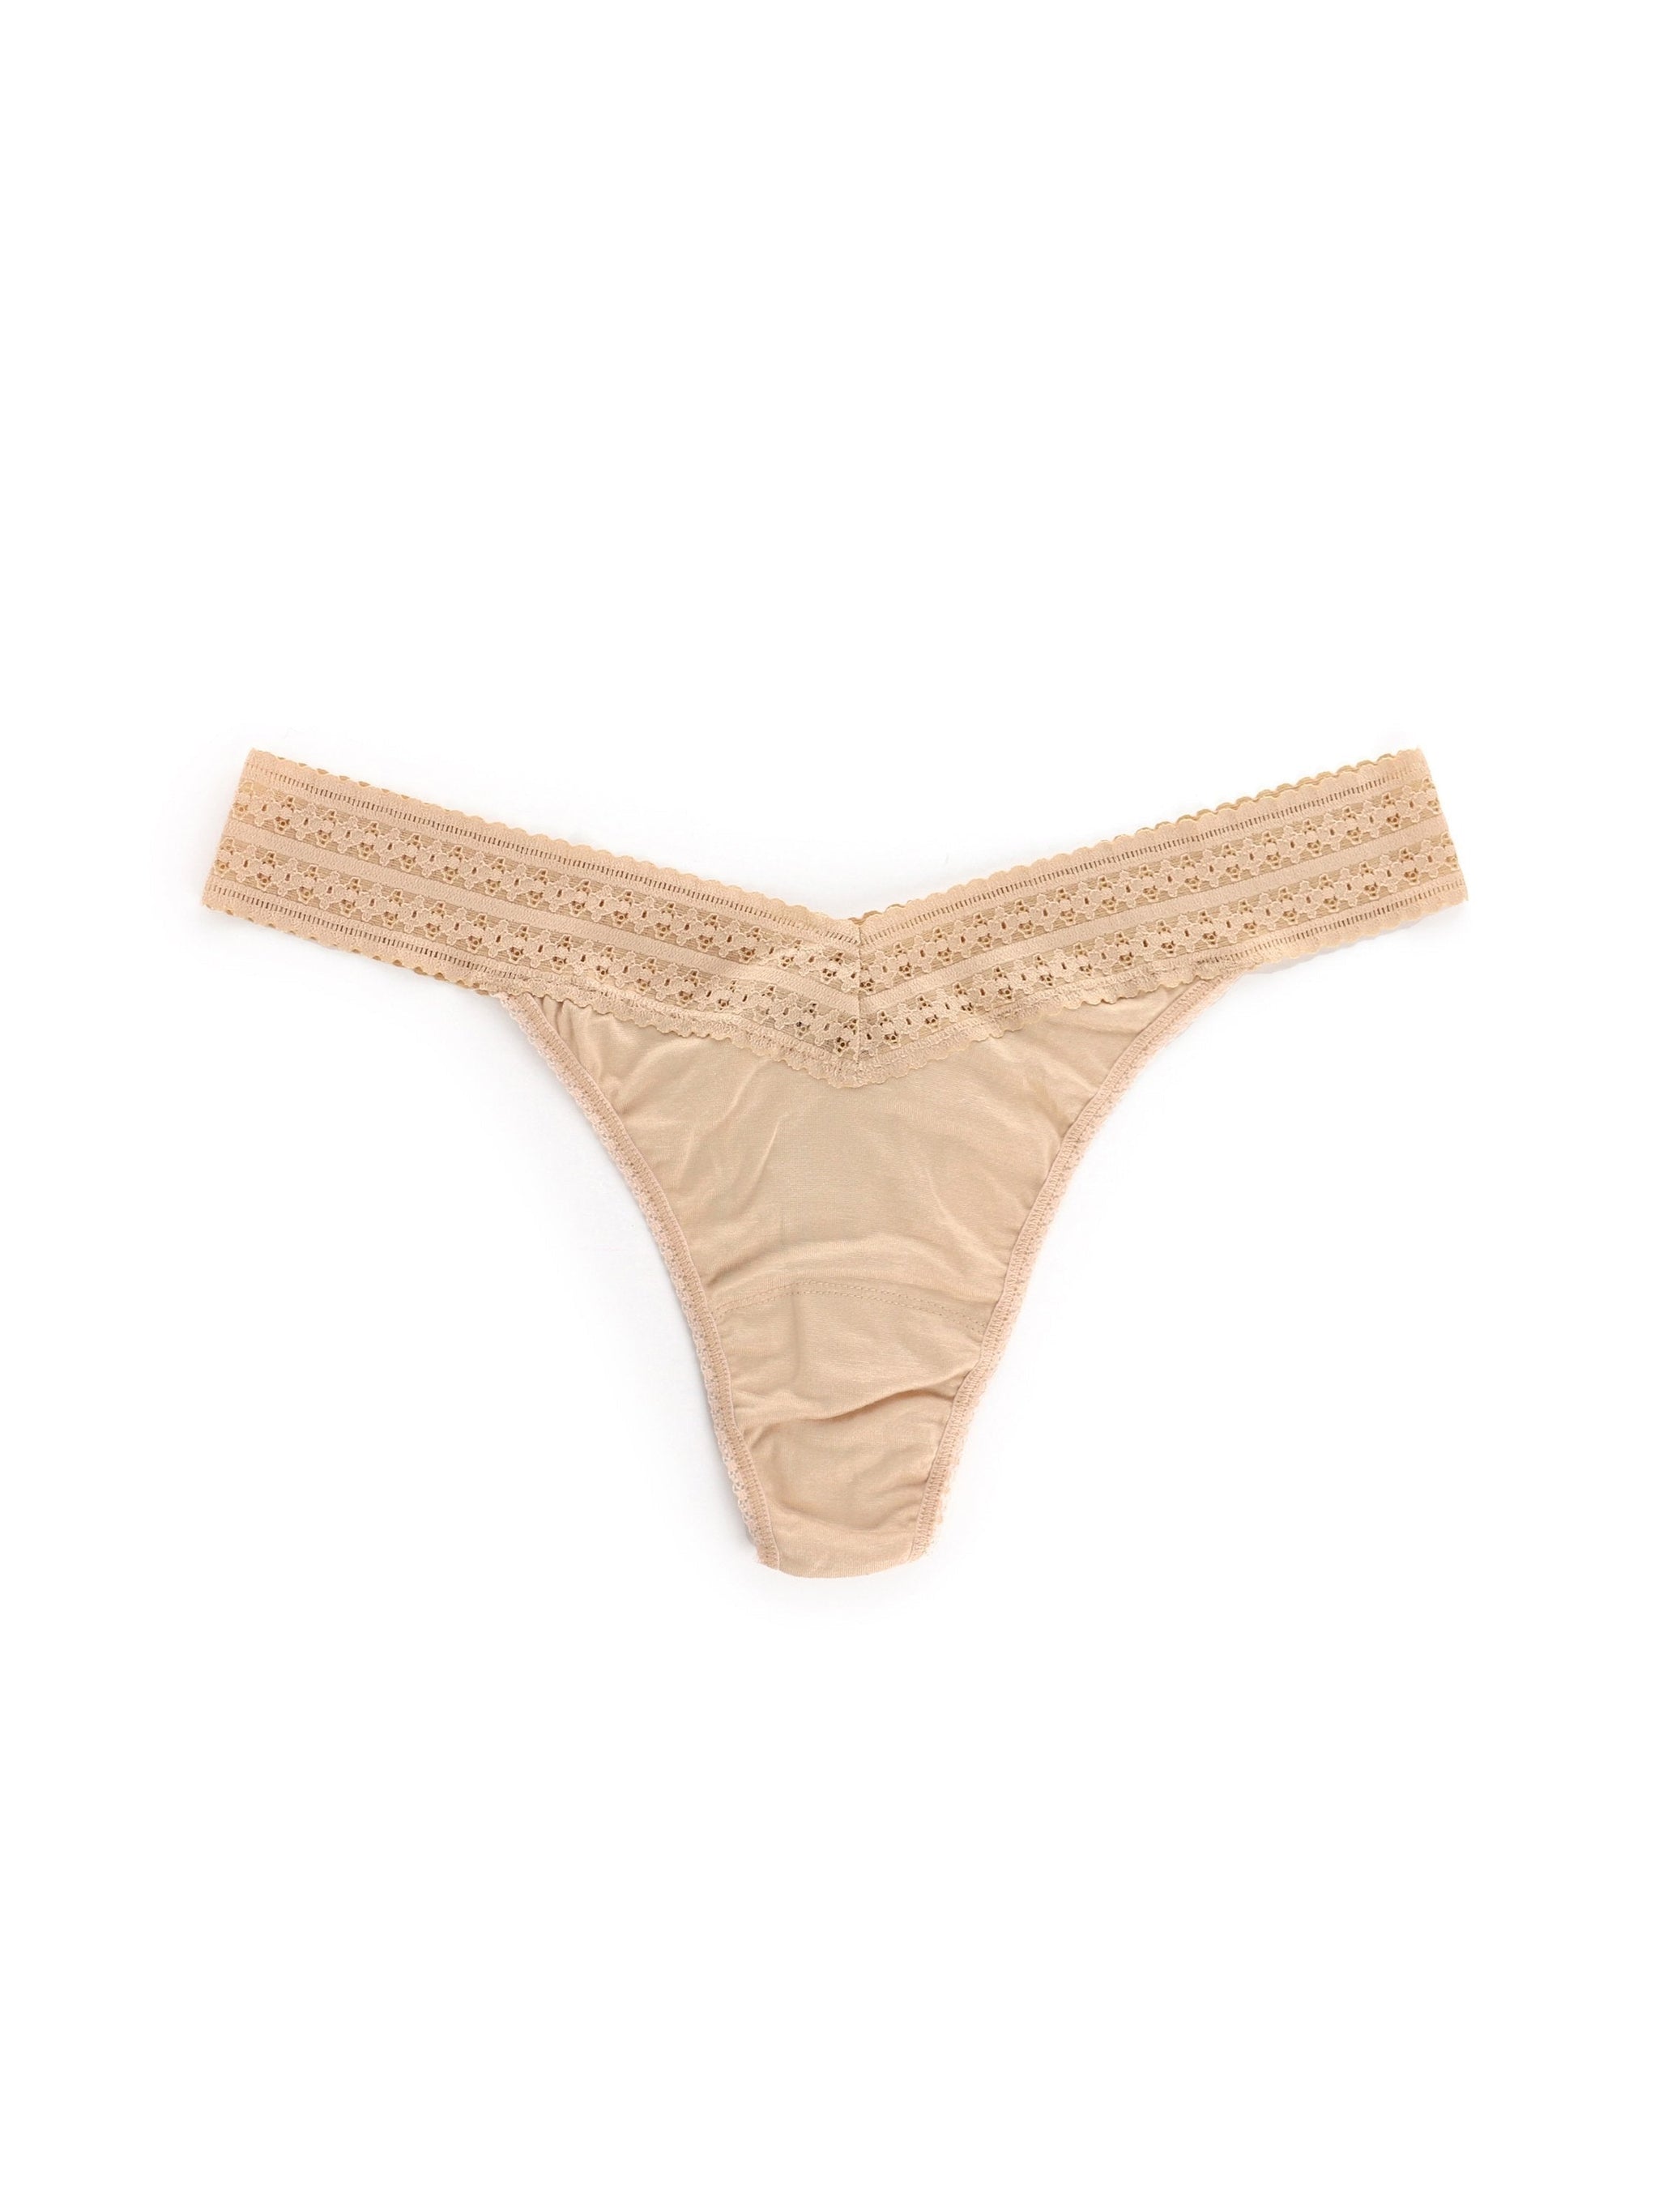 Plus Size Original Rise Thong Panties